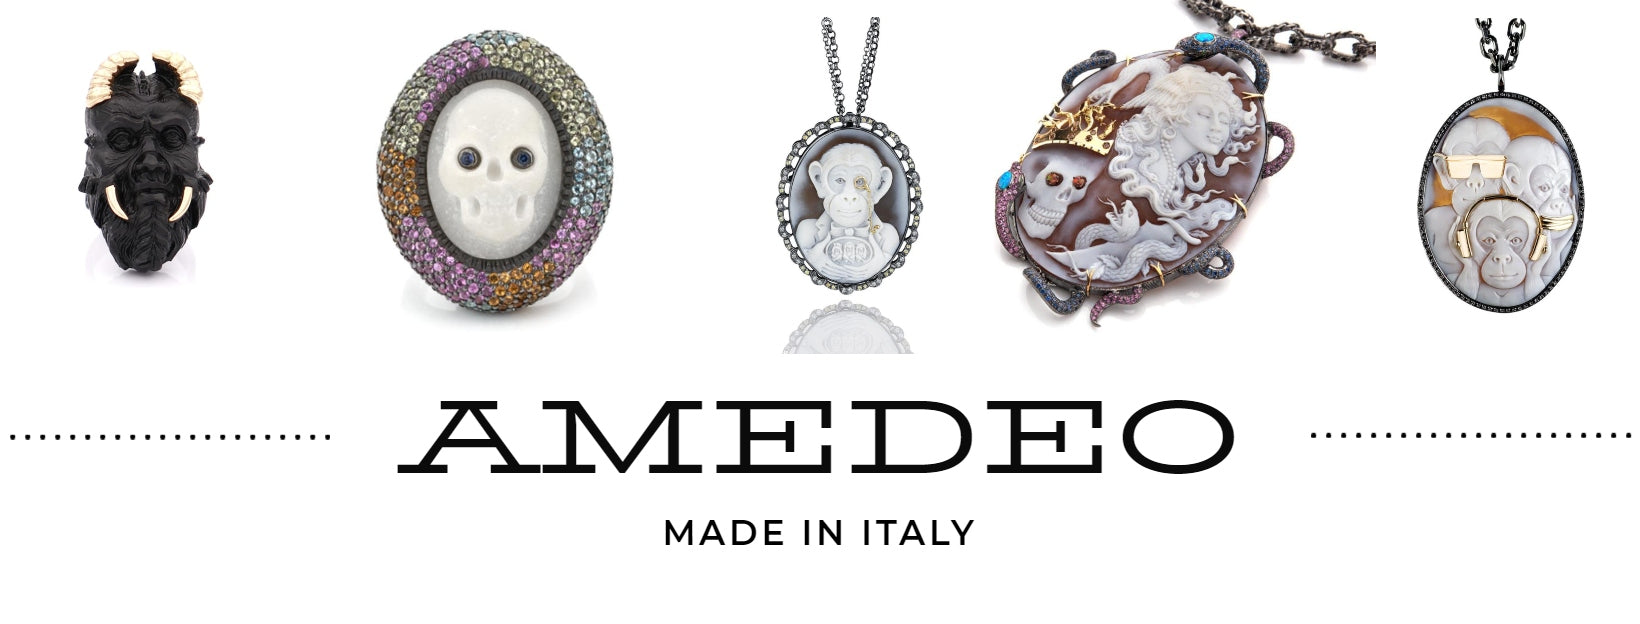 Cameo Italiano  Jewellery through the Generations